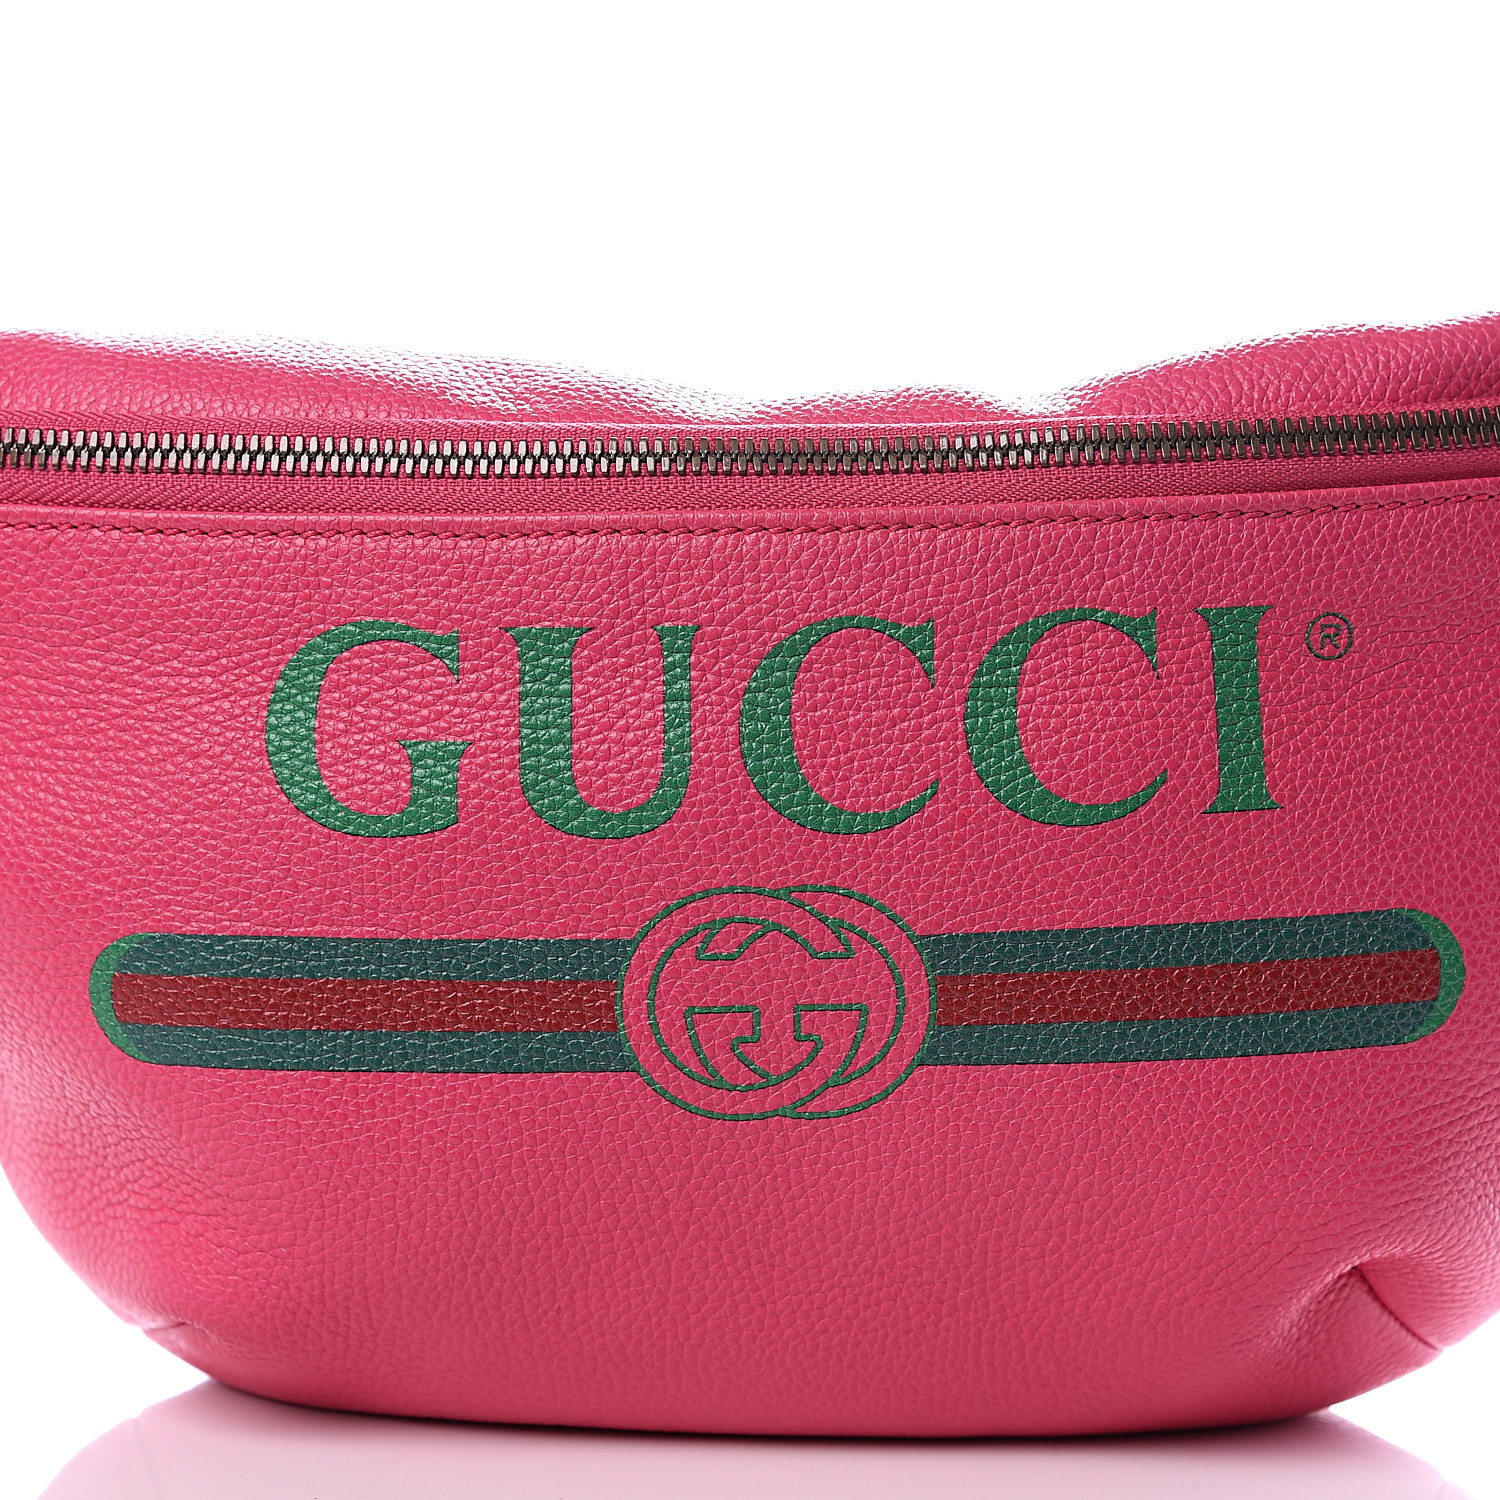 GUCCI Grained Calfskin Gucci Print Belt Bag Pink 549174